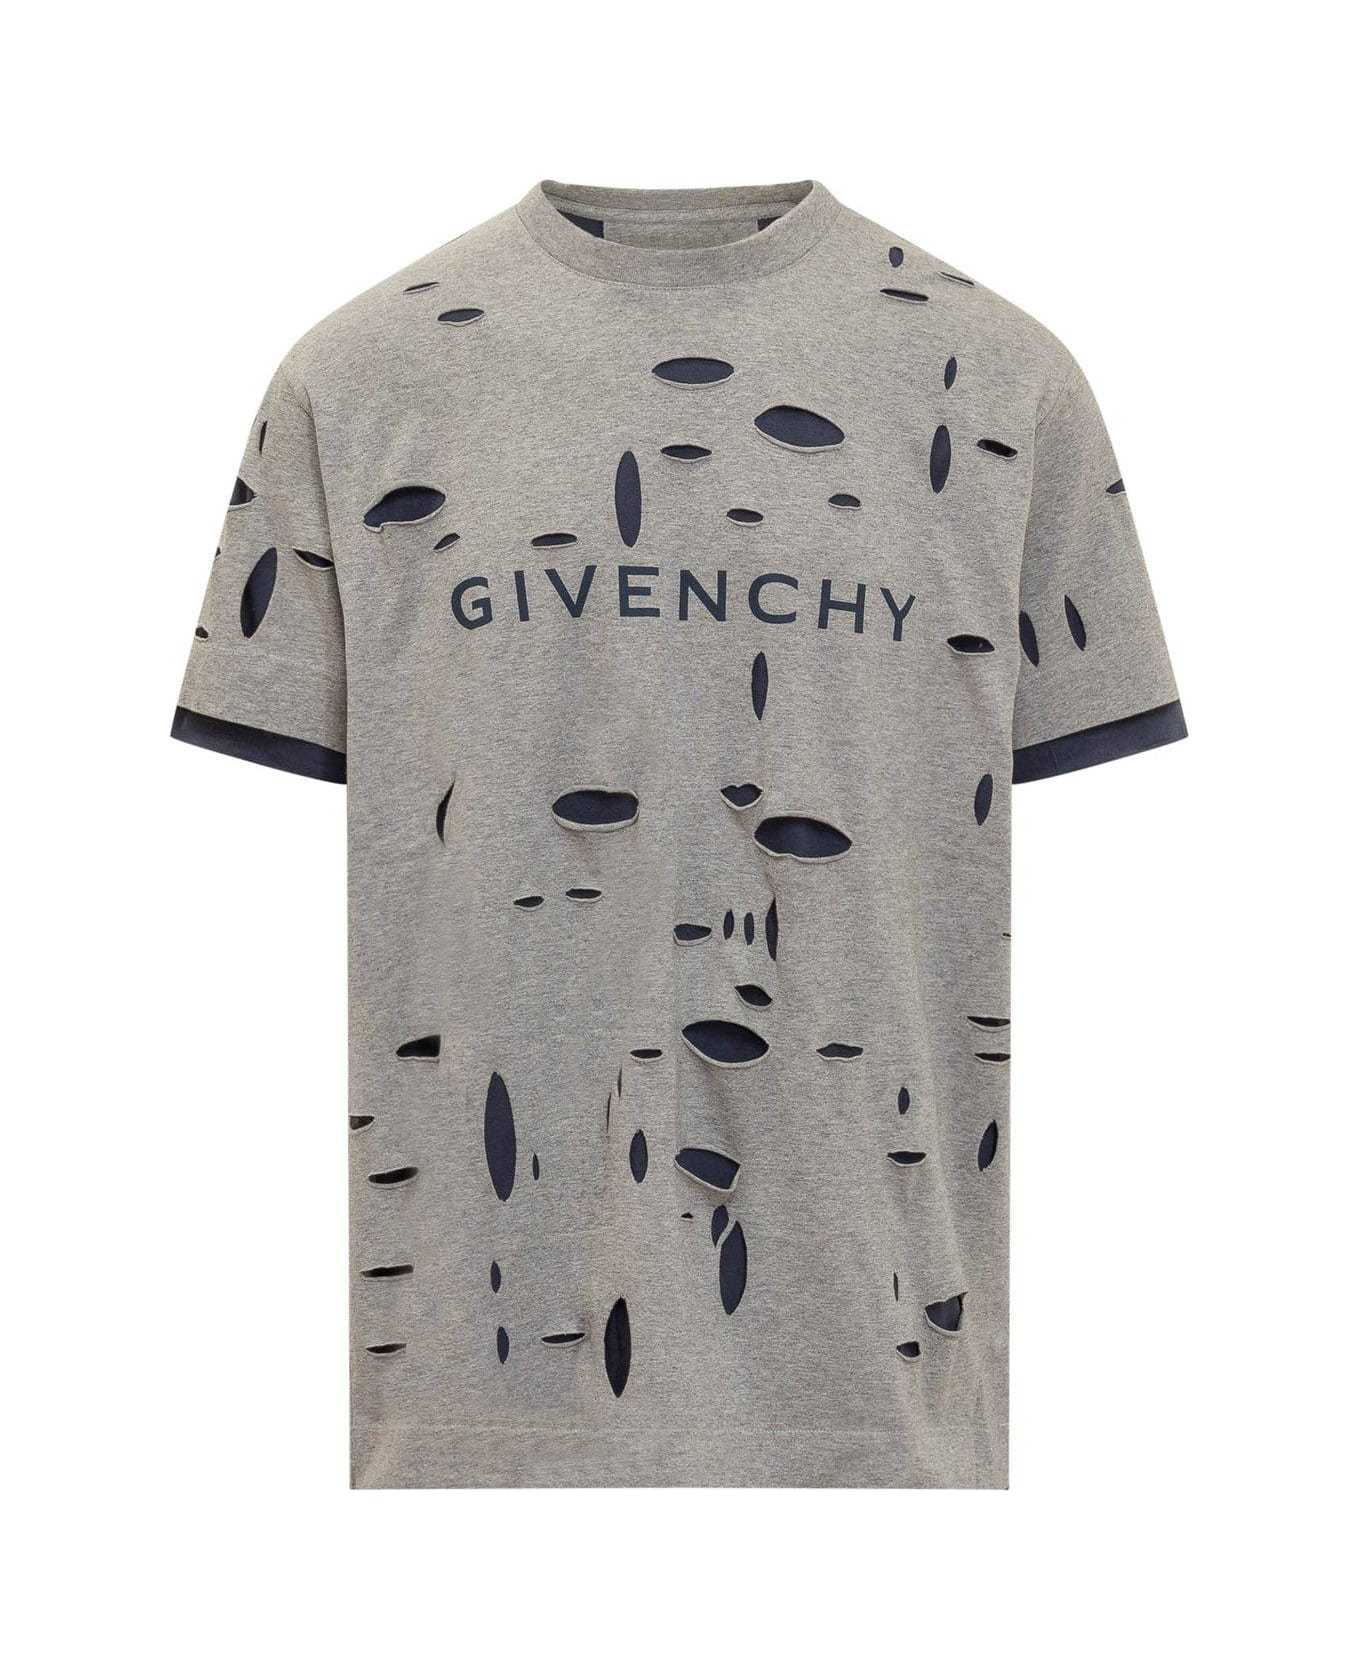 Givenchy Distressed Crewneck T-shirt - GREY BLUE